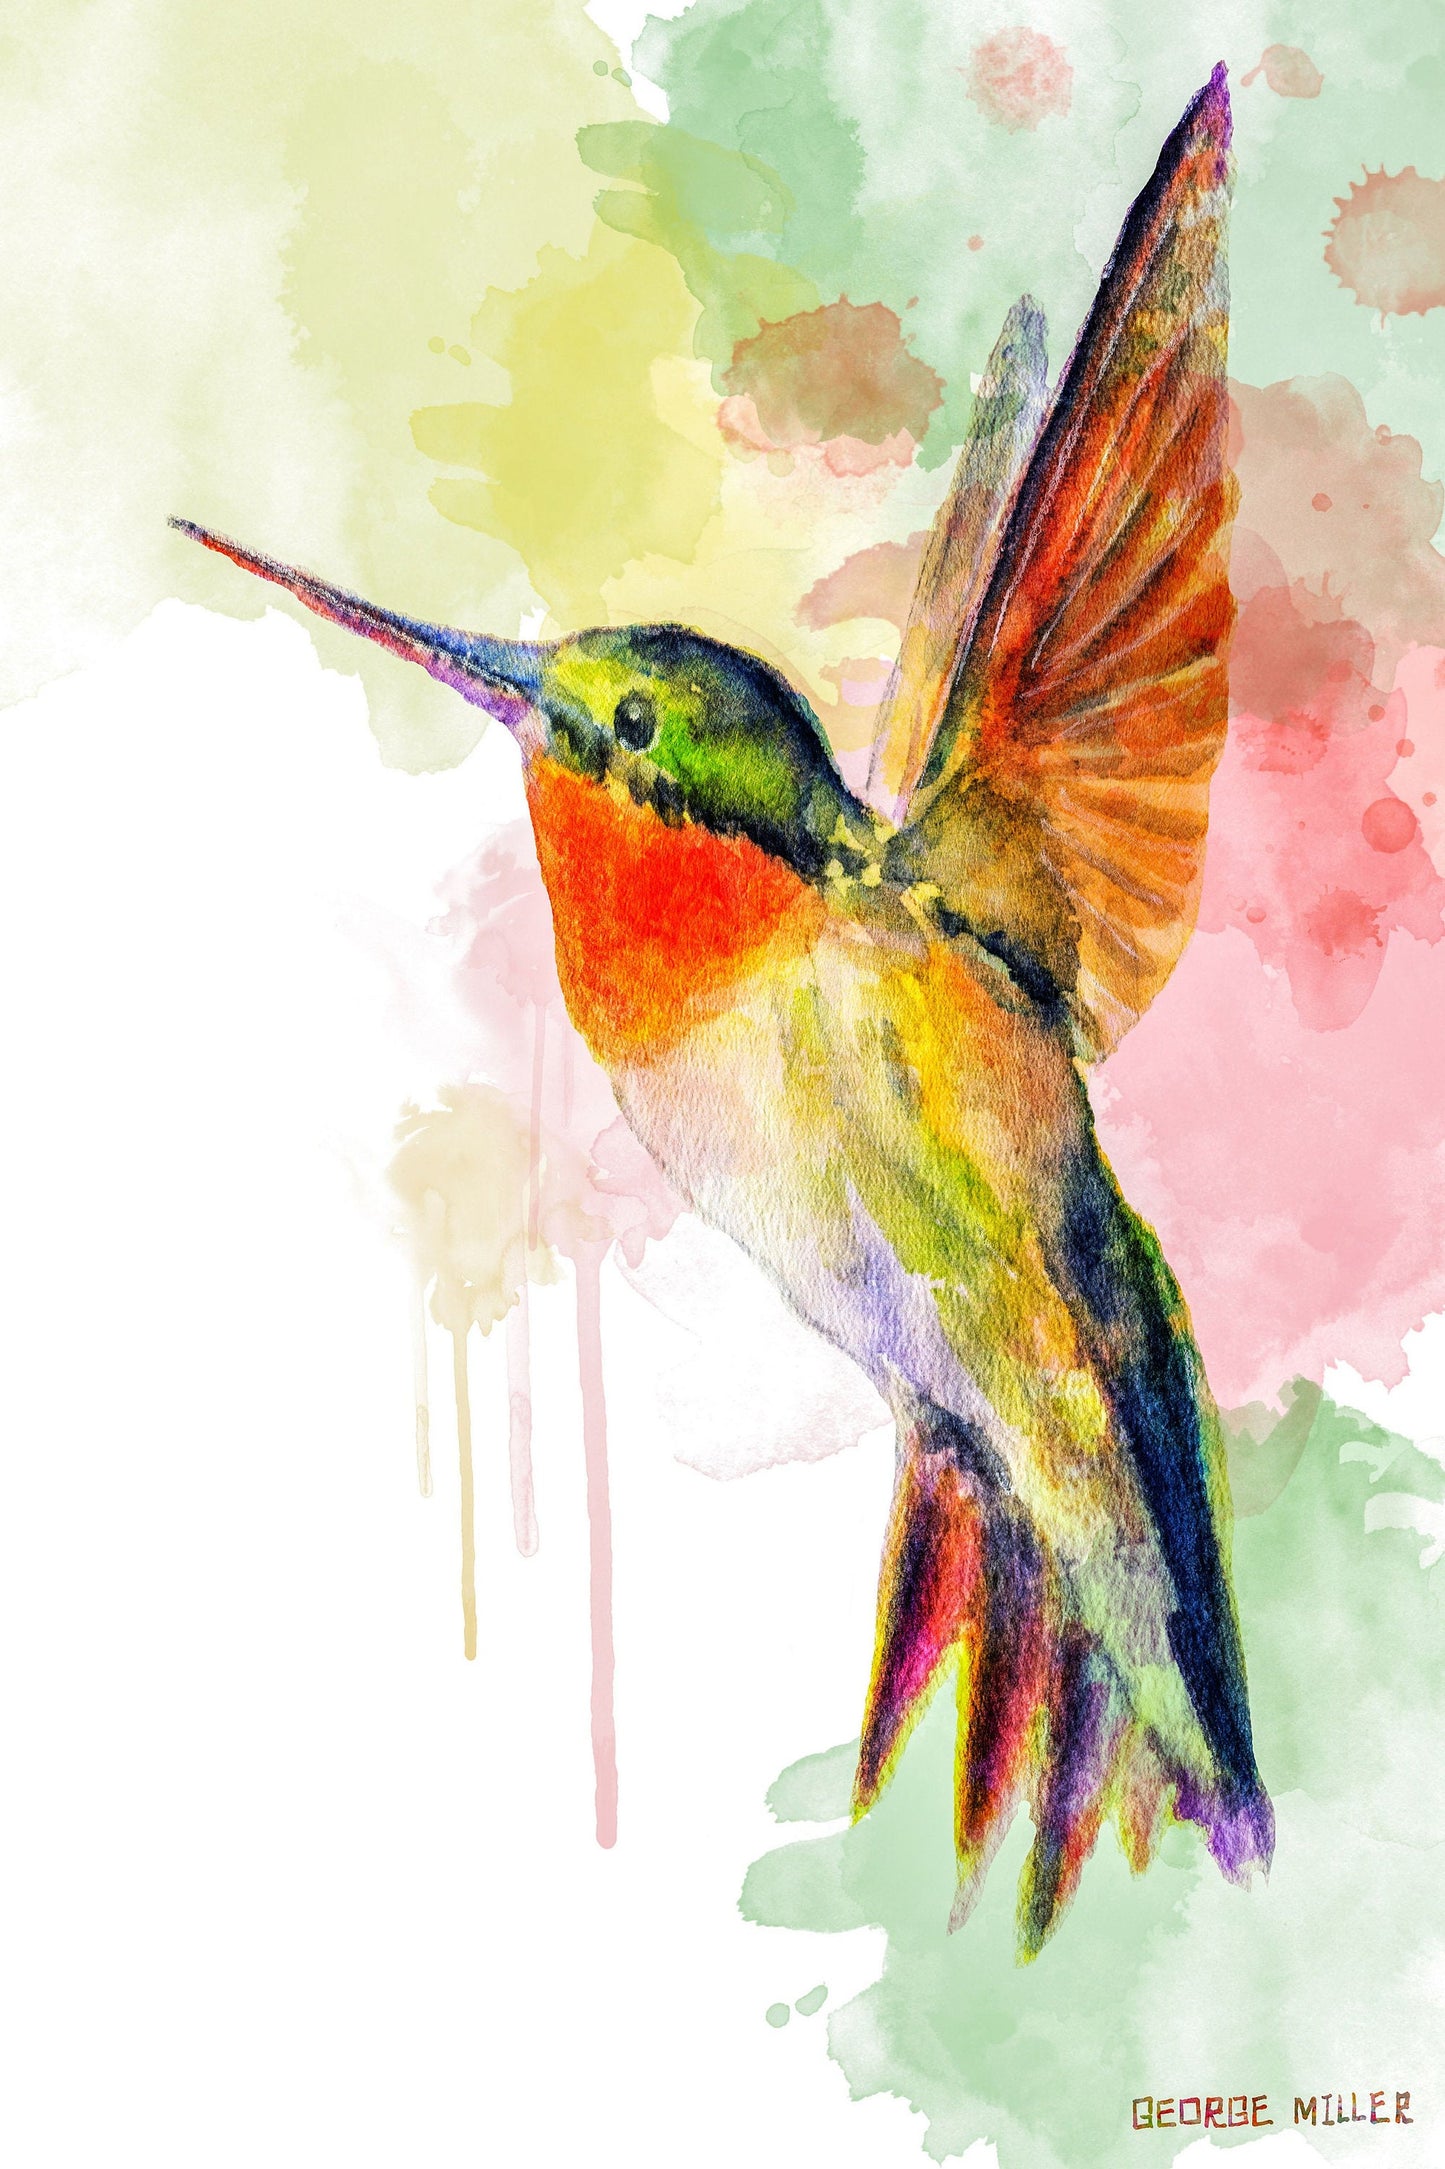 Canvas Print Hummingbird, Wall Prints Minimalist, Abstract Art Print, Art, Artwork Original, Modern Art, Original Artwork Painting